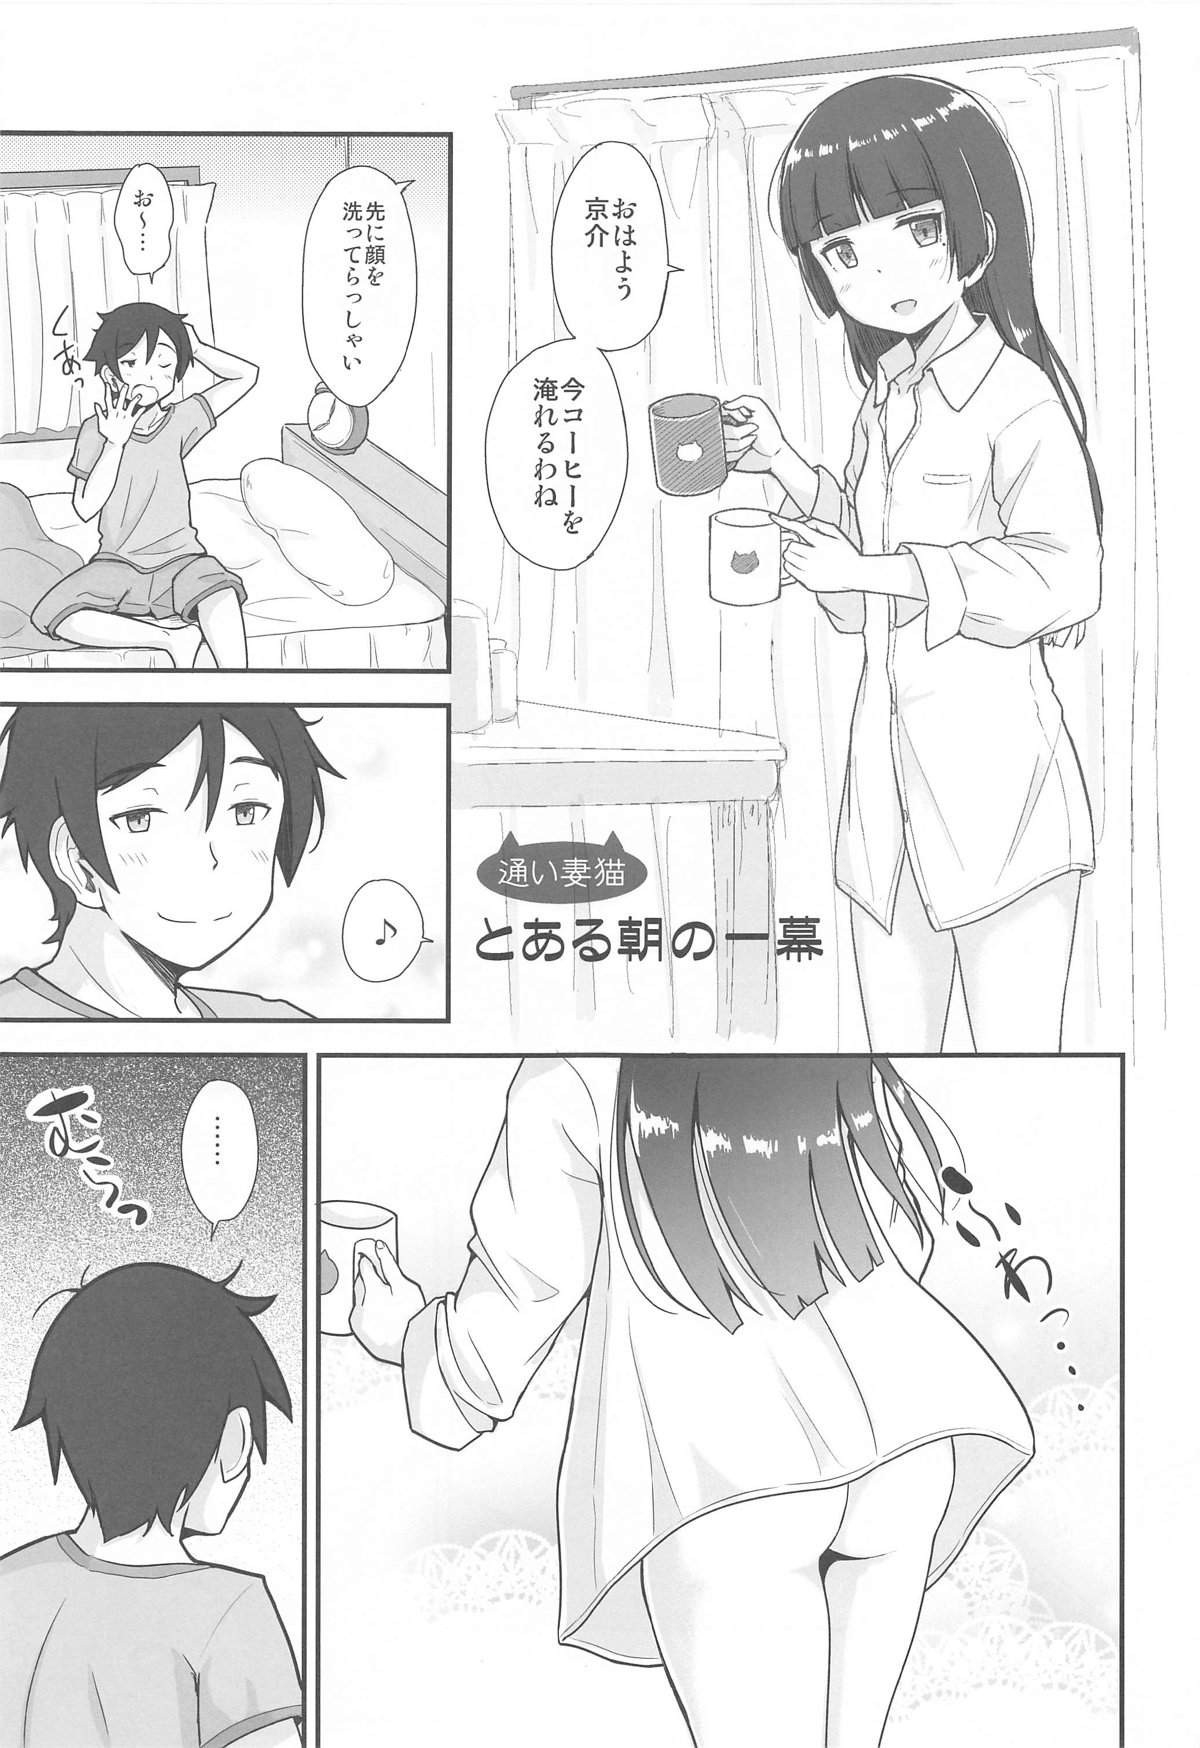 【C102】京介の部屋に通い妻をしている黒猫が、朝から彼シャツ状態でコーヒーを入れていたら、寝起きの京介が発情して朝から激しく中出しセックスされるｗ【俺の妹がこんなに可愛いわけがない】